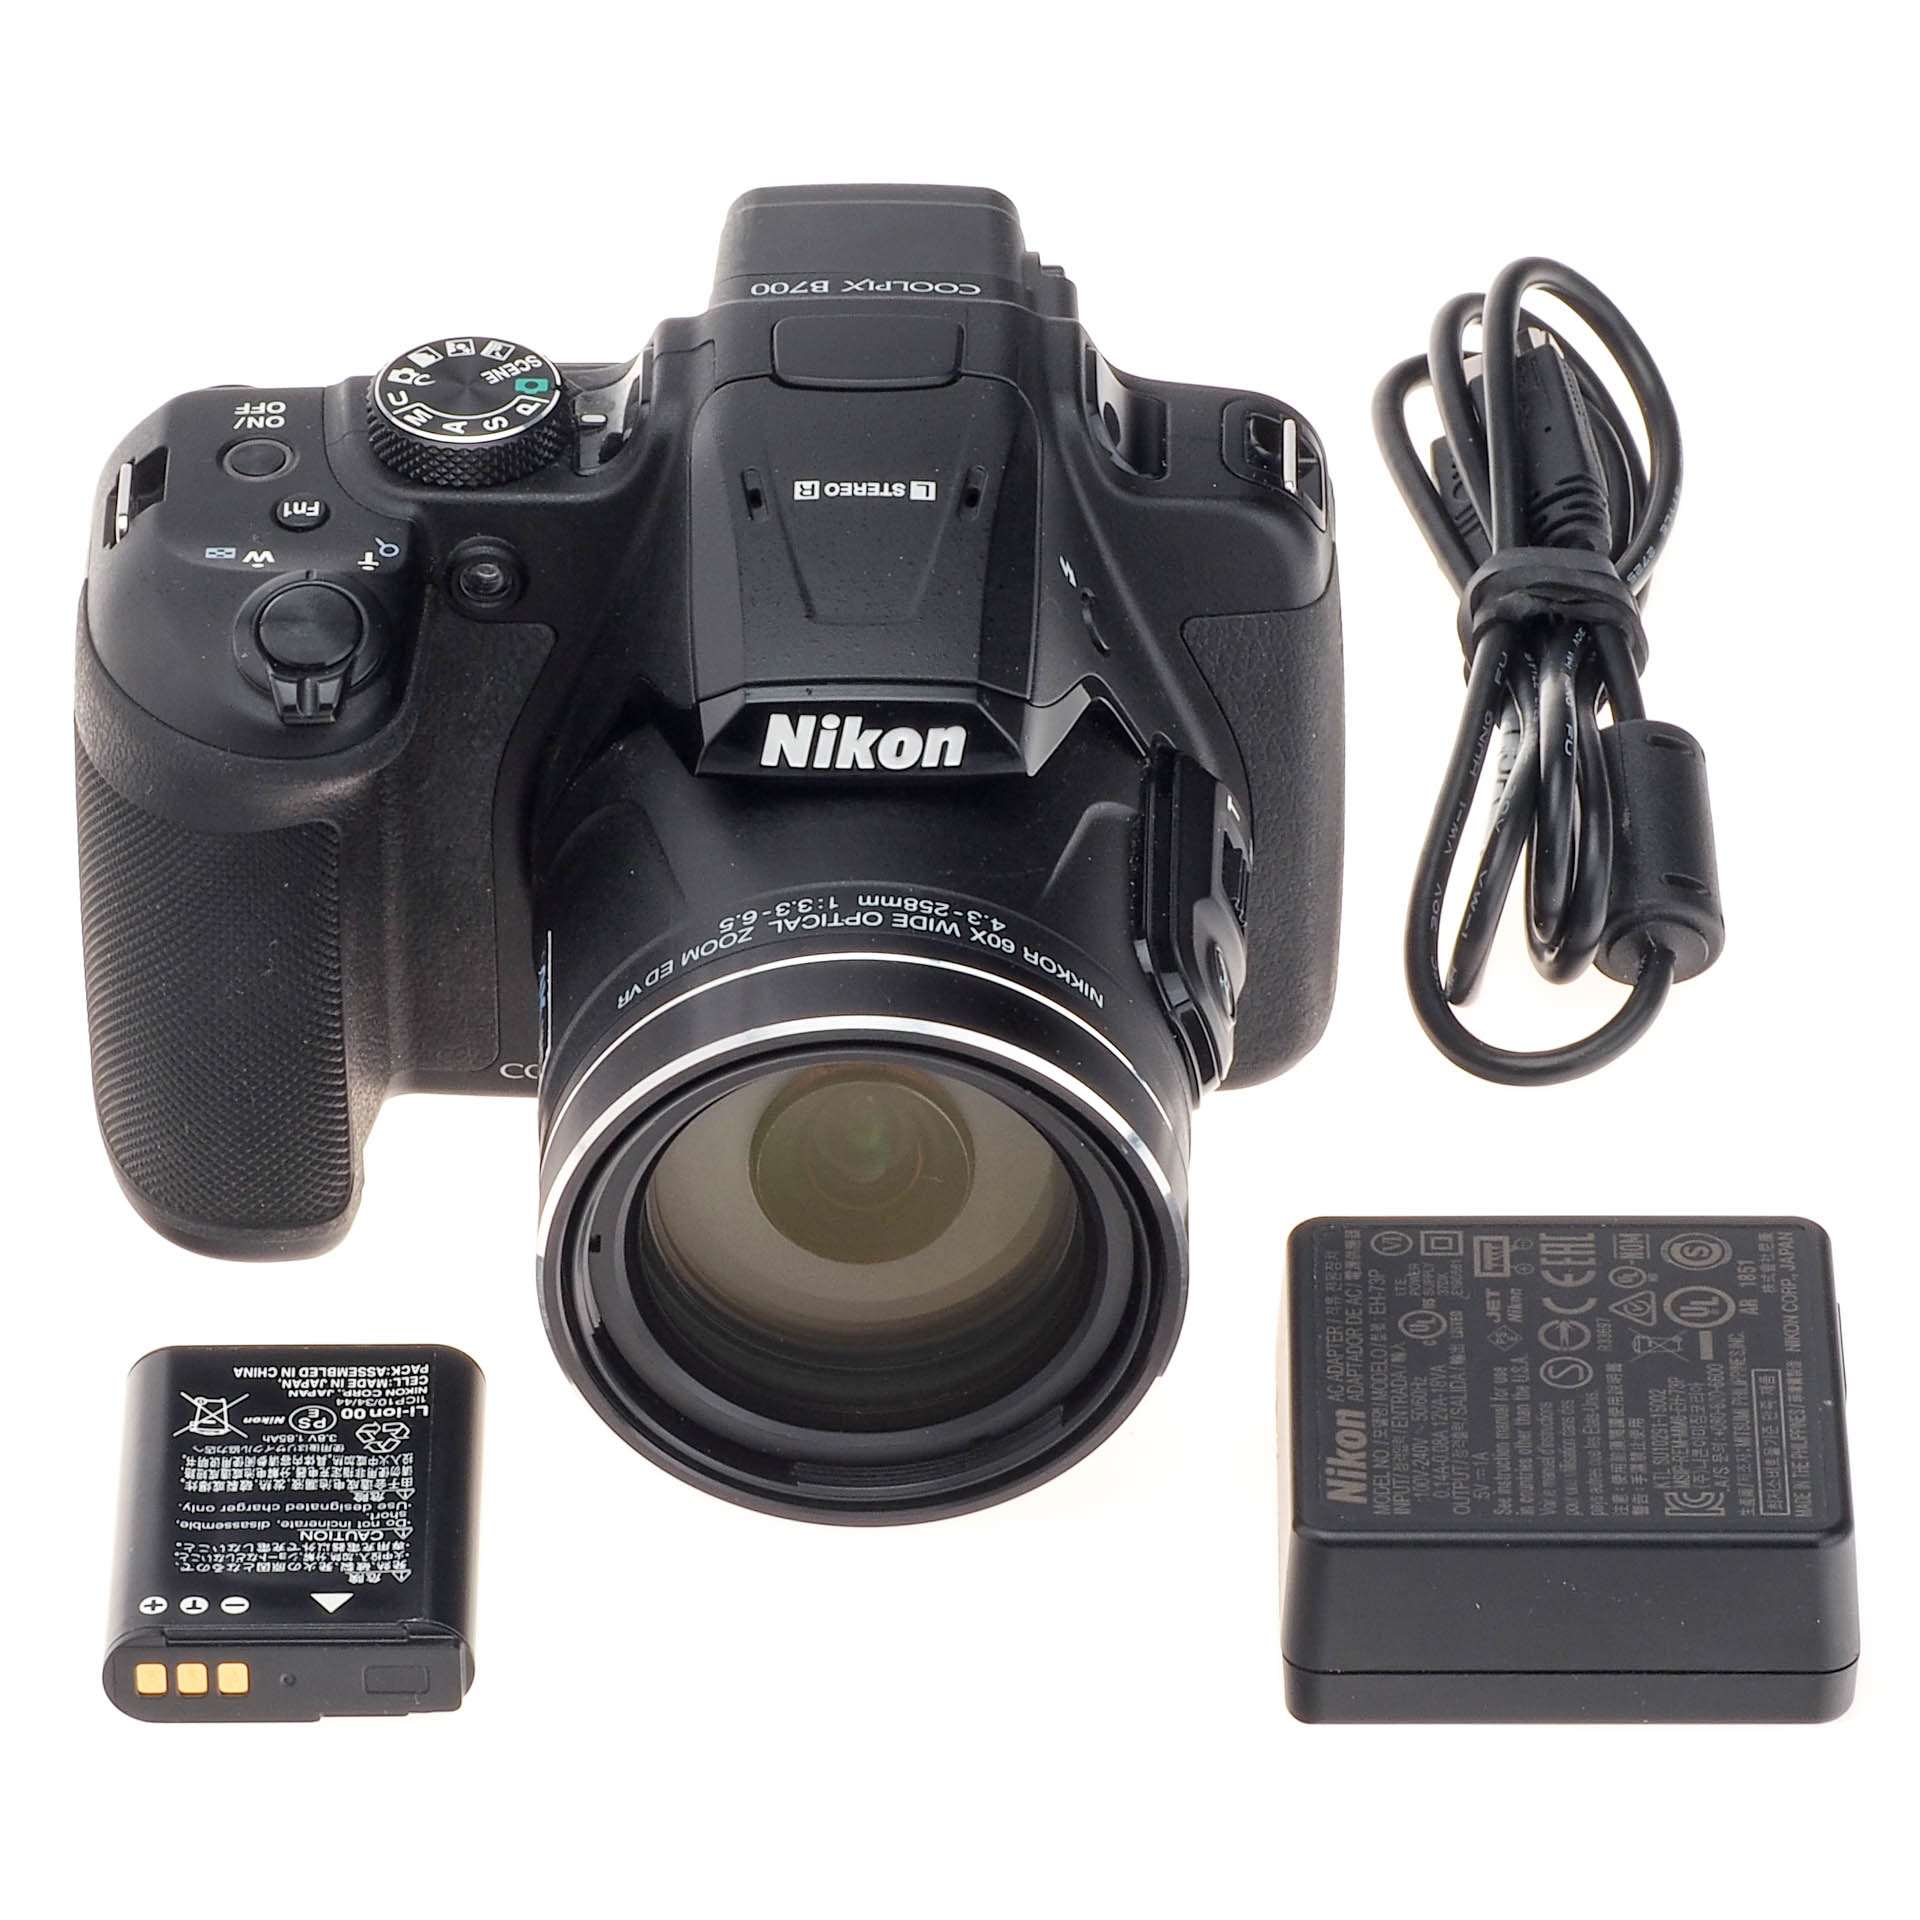 Buy B700 20MP 60X Optical Zoom Digital Camera Black 26510 - National Camera Exchange